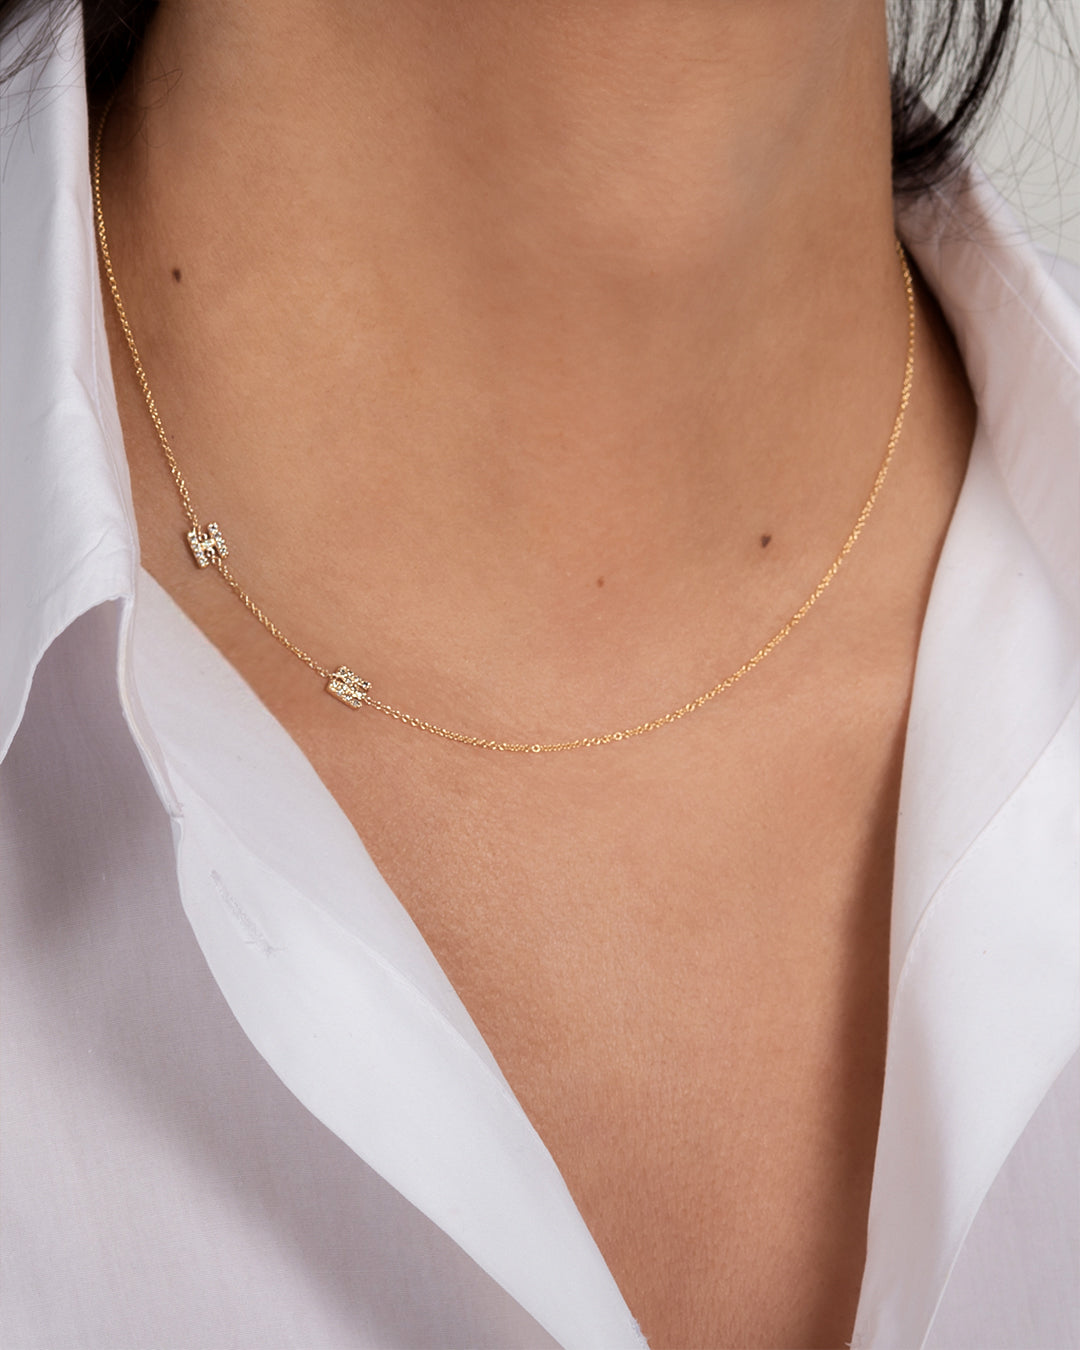 Necklaces - Zoe Lev Jewelry